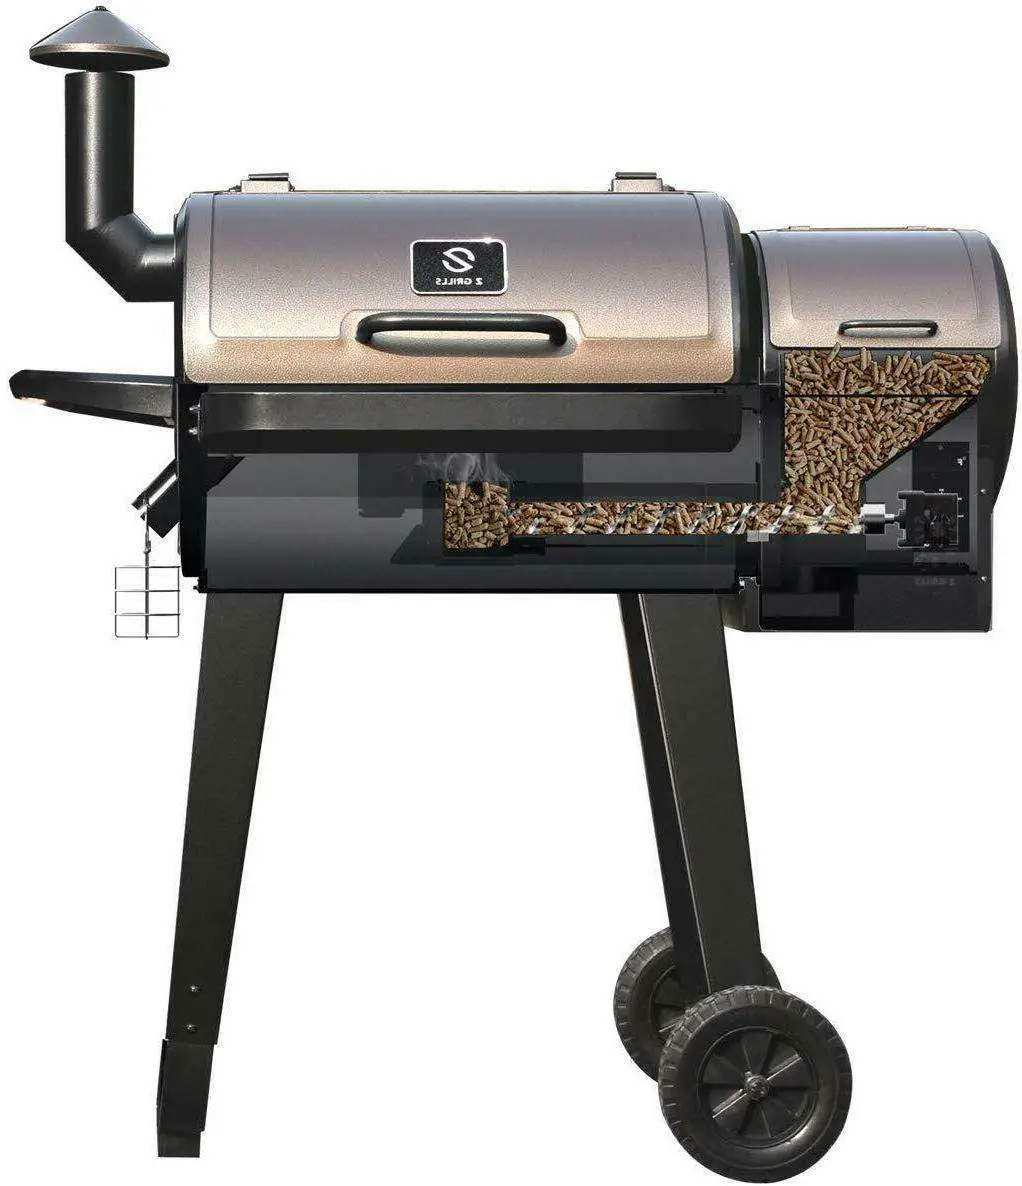 Z GRILLS Upgrade Grill Wood Pellet Grills Smoker